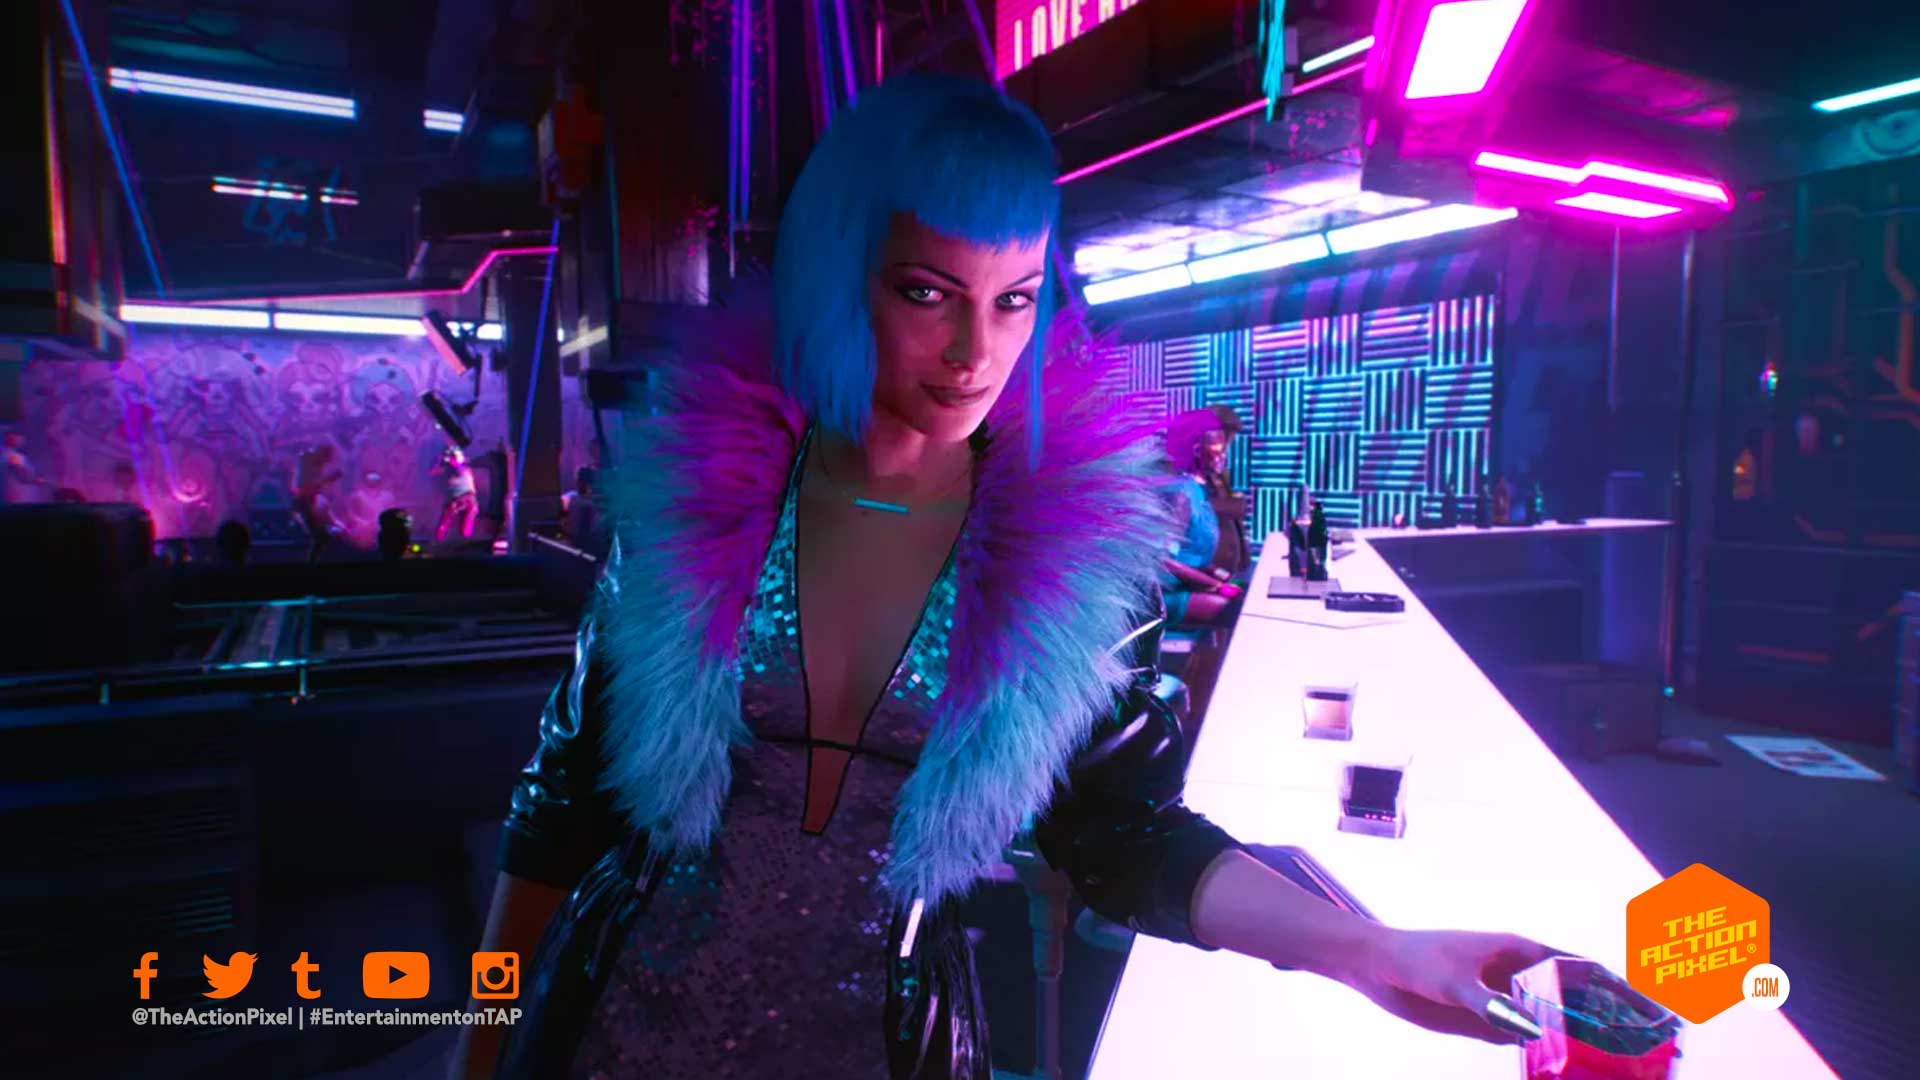 cyberpunk, cyberpunk 2077, the action pixel, entertainment on tap, cd projekt red, cyberpunk 2077 delayed, cyberpunk 2077 release date, featured, cyberpunk 2077 official trailer, cyberpunk 2077 the gig,night city